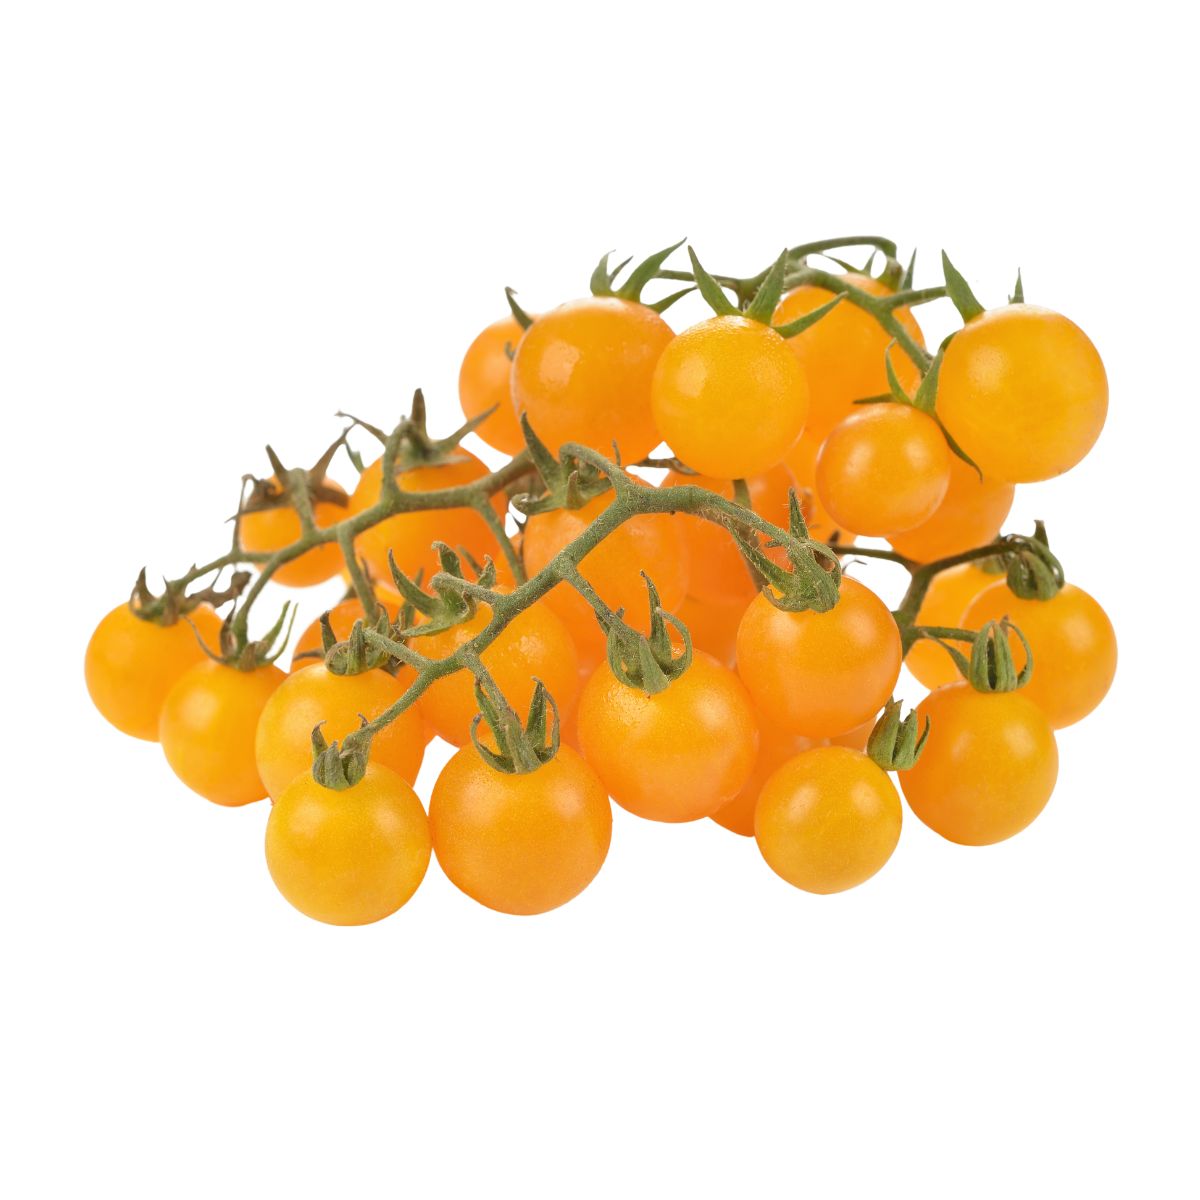 Tomate - Seminte de tomate Cherry galbene, 0.5 grame FLORIAN, hectarul.ro